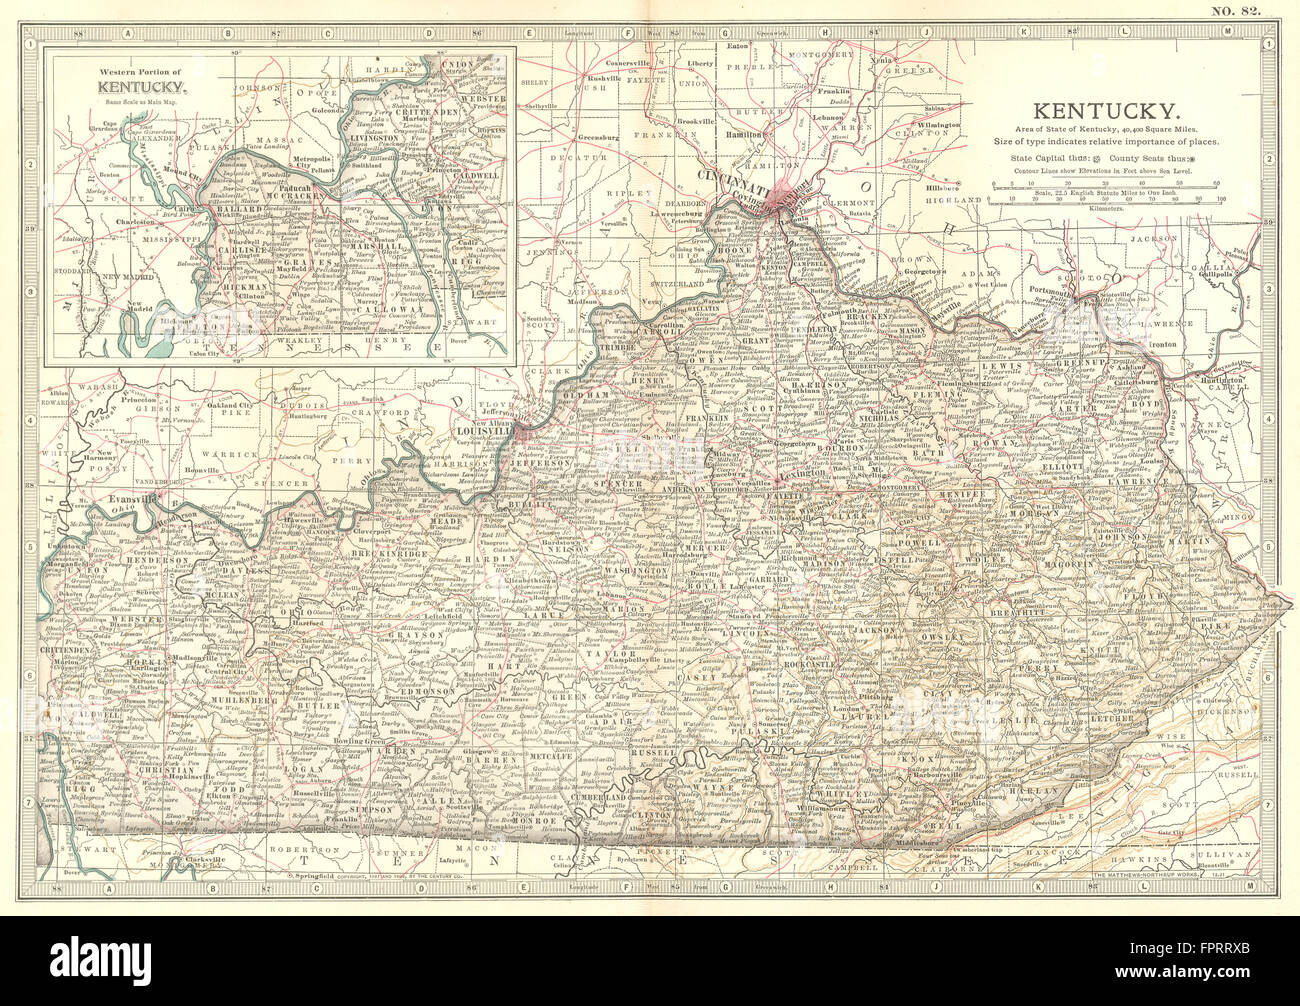 KENTUCKY: State map showing civil war battlefields & dates. Britannica, 1903 Stock Photo